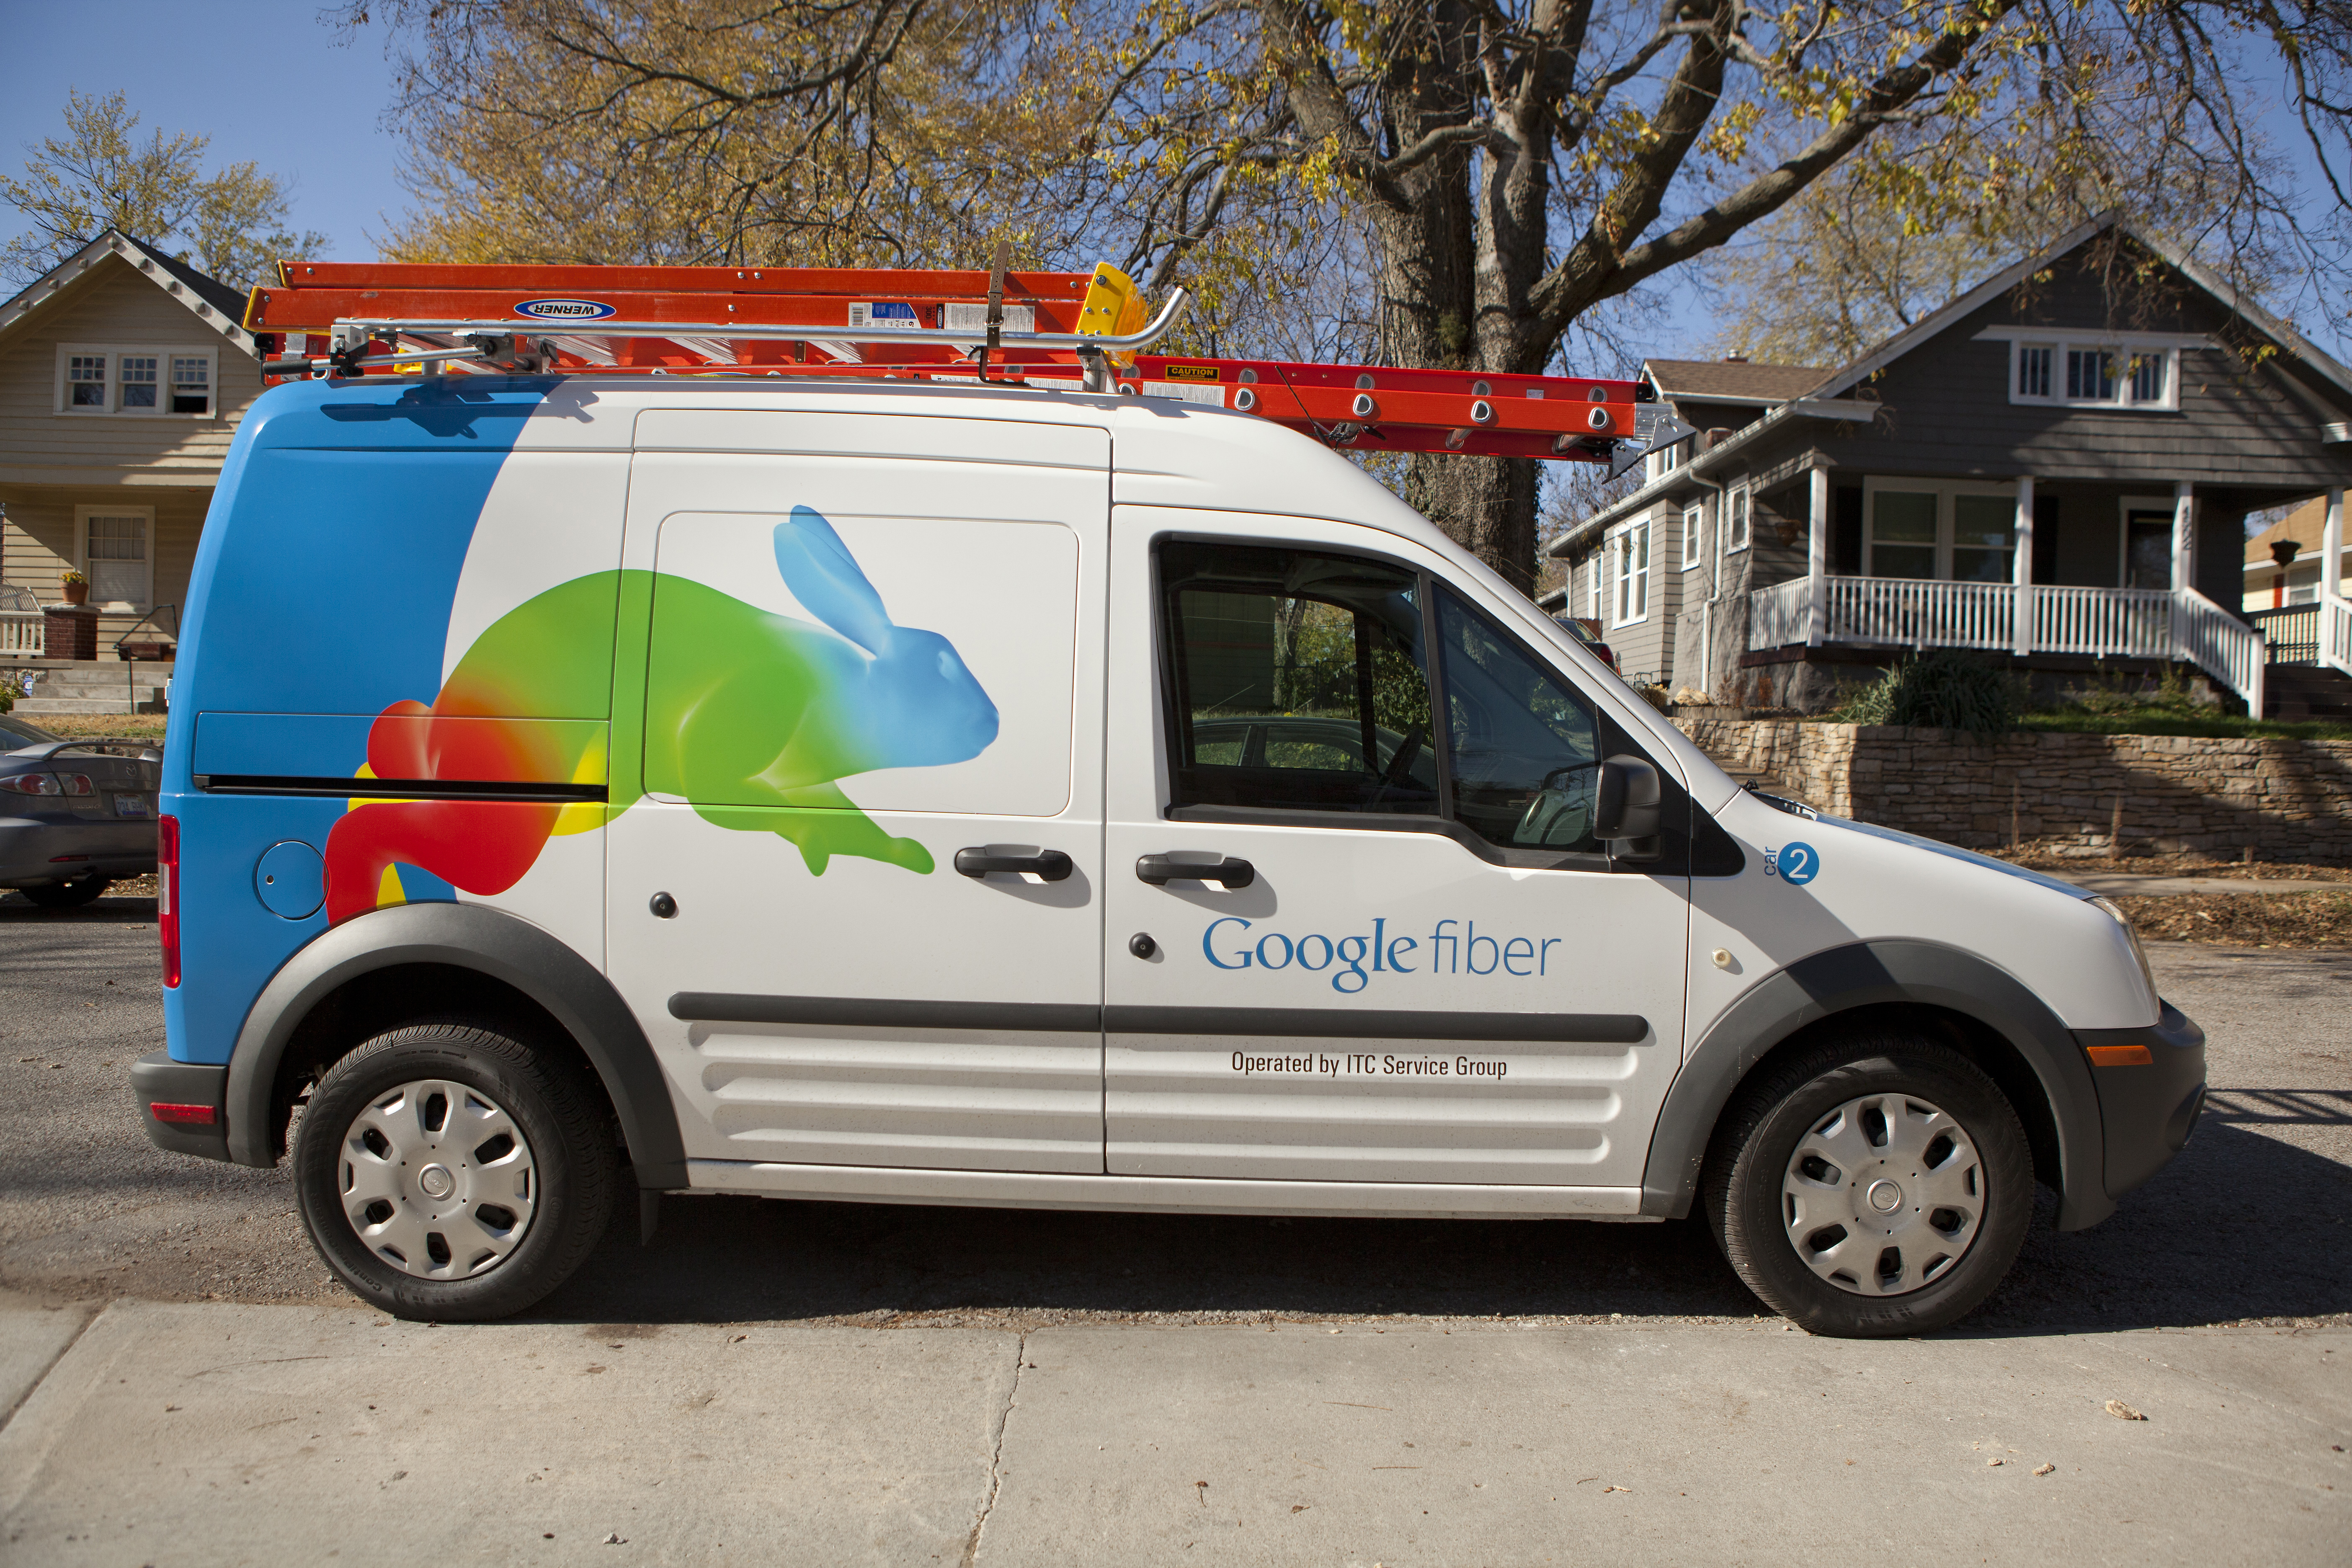 Google Fiber will launch in Austin in December